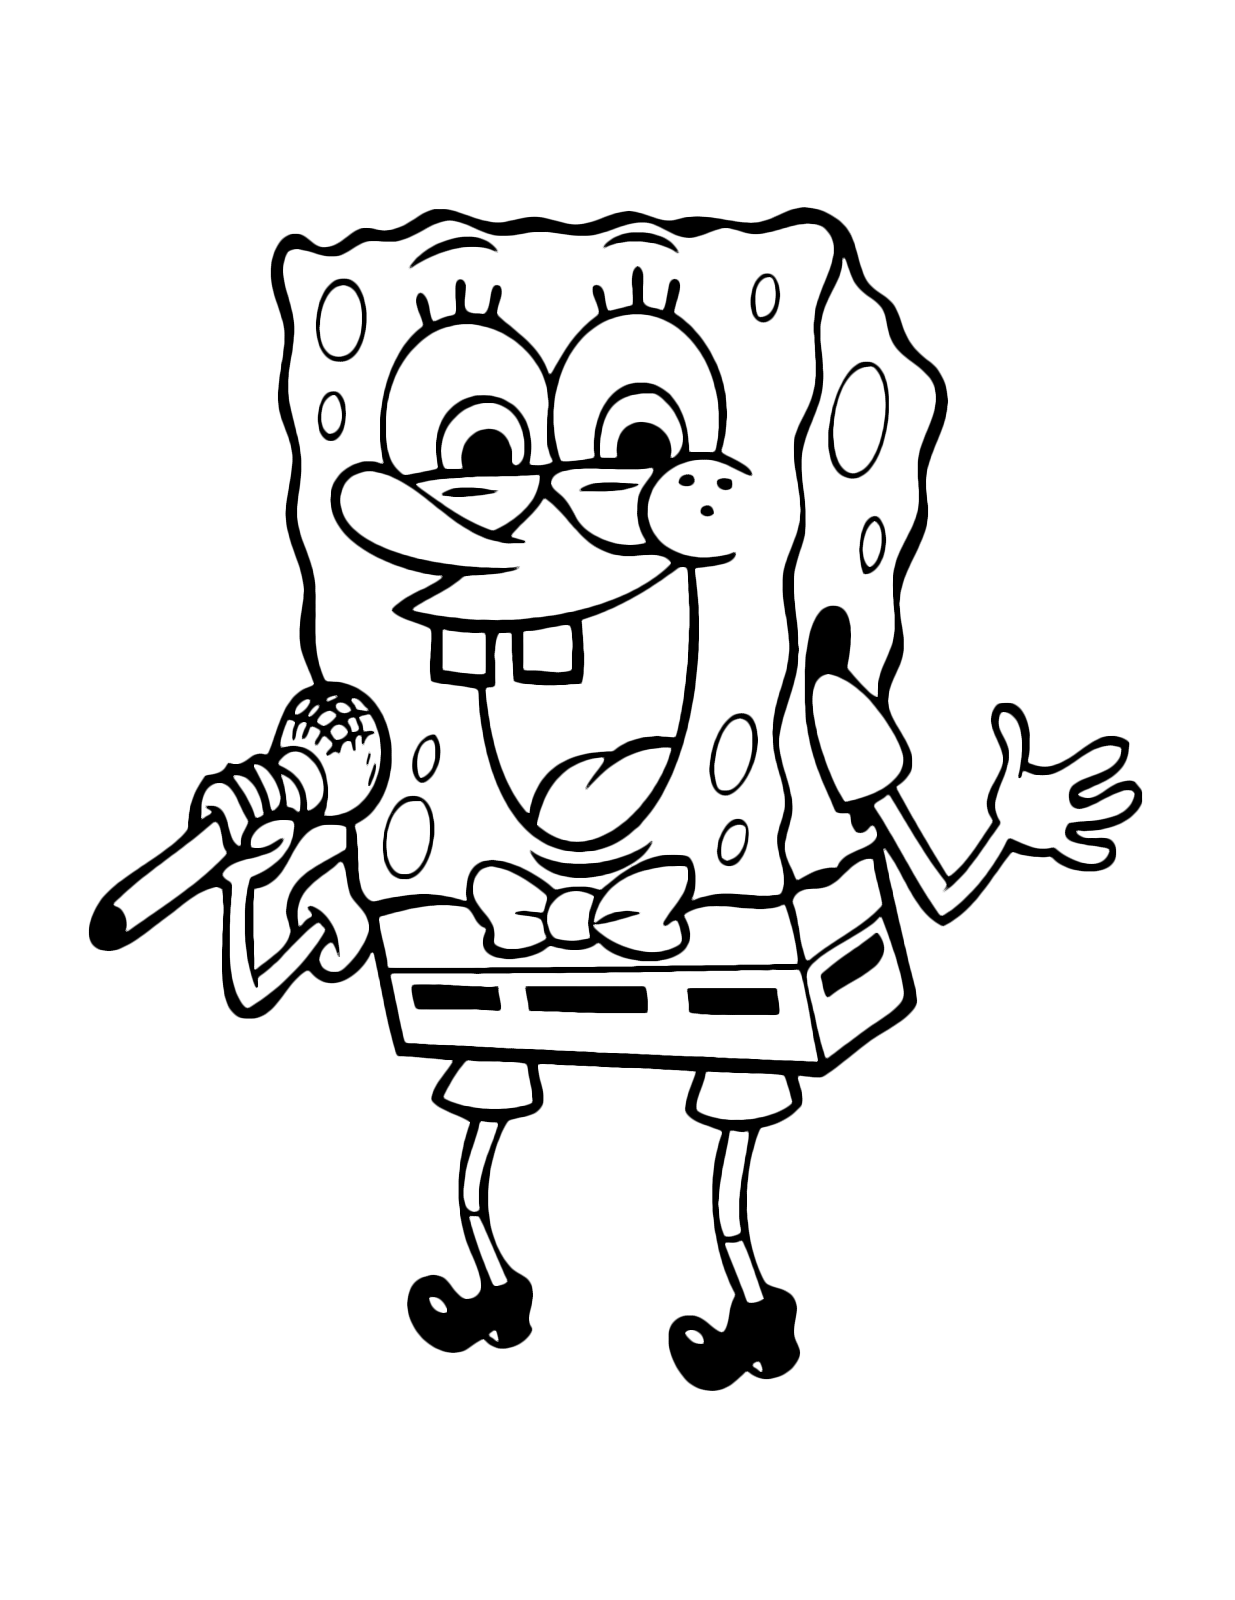 SpongeBob - SpongeBob singing with microphone